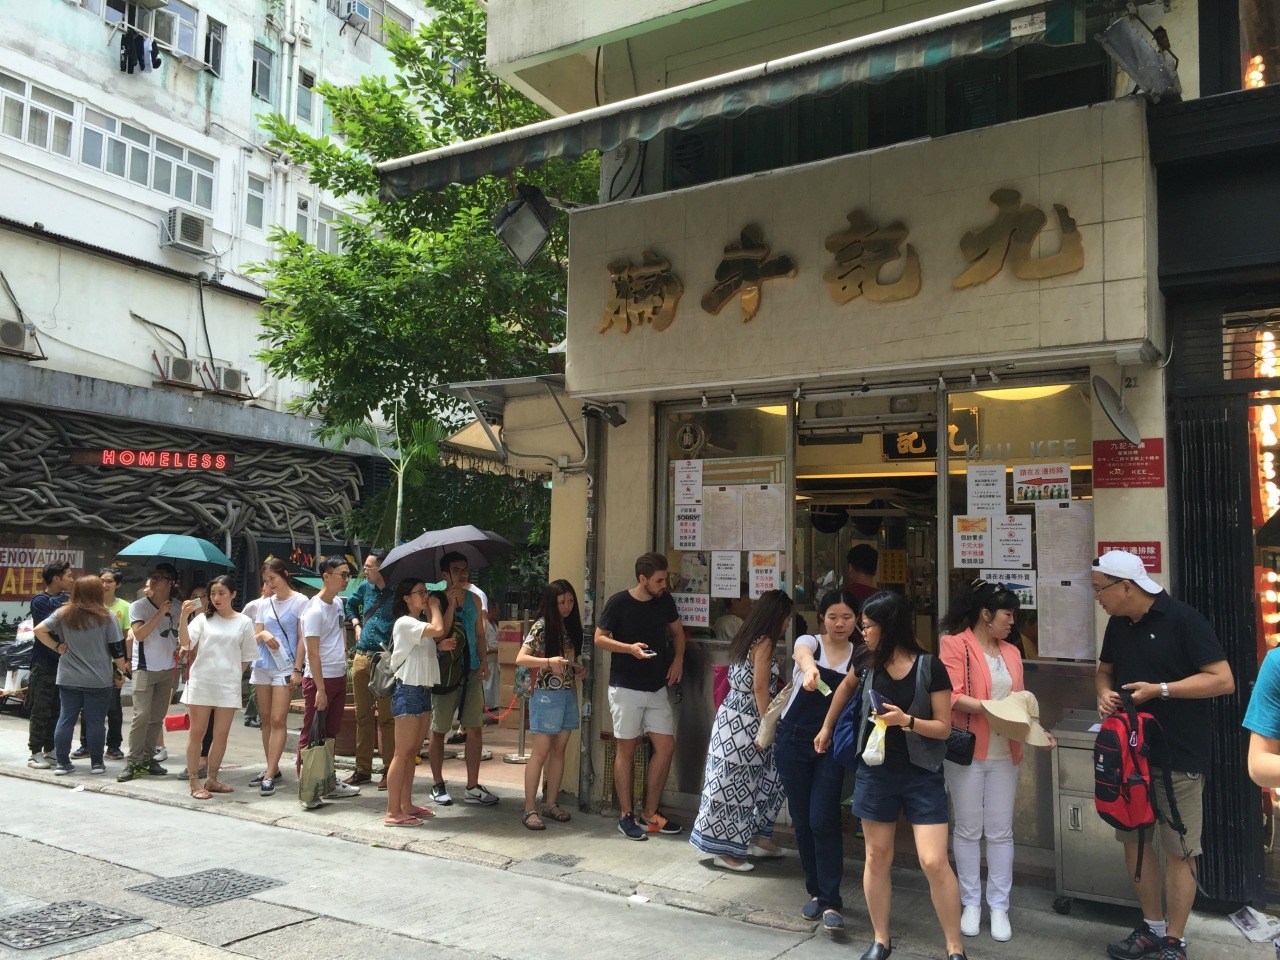 queues outside Kau Kee restaurant